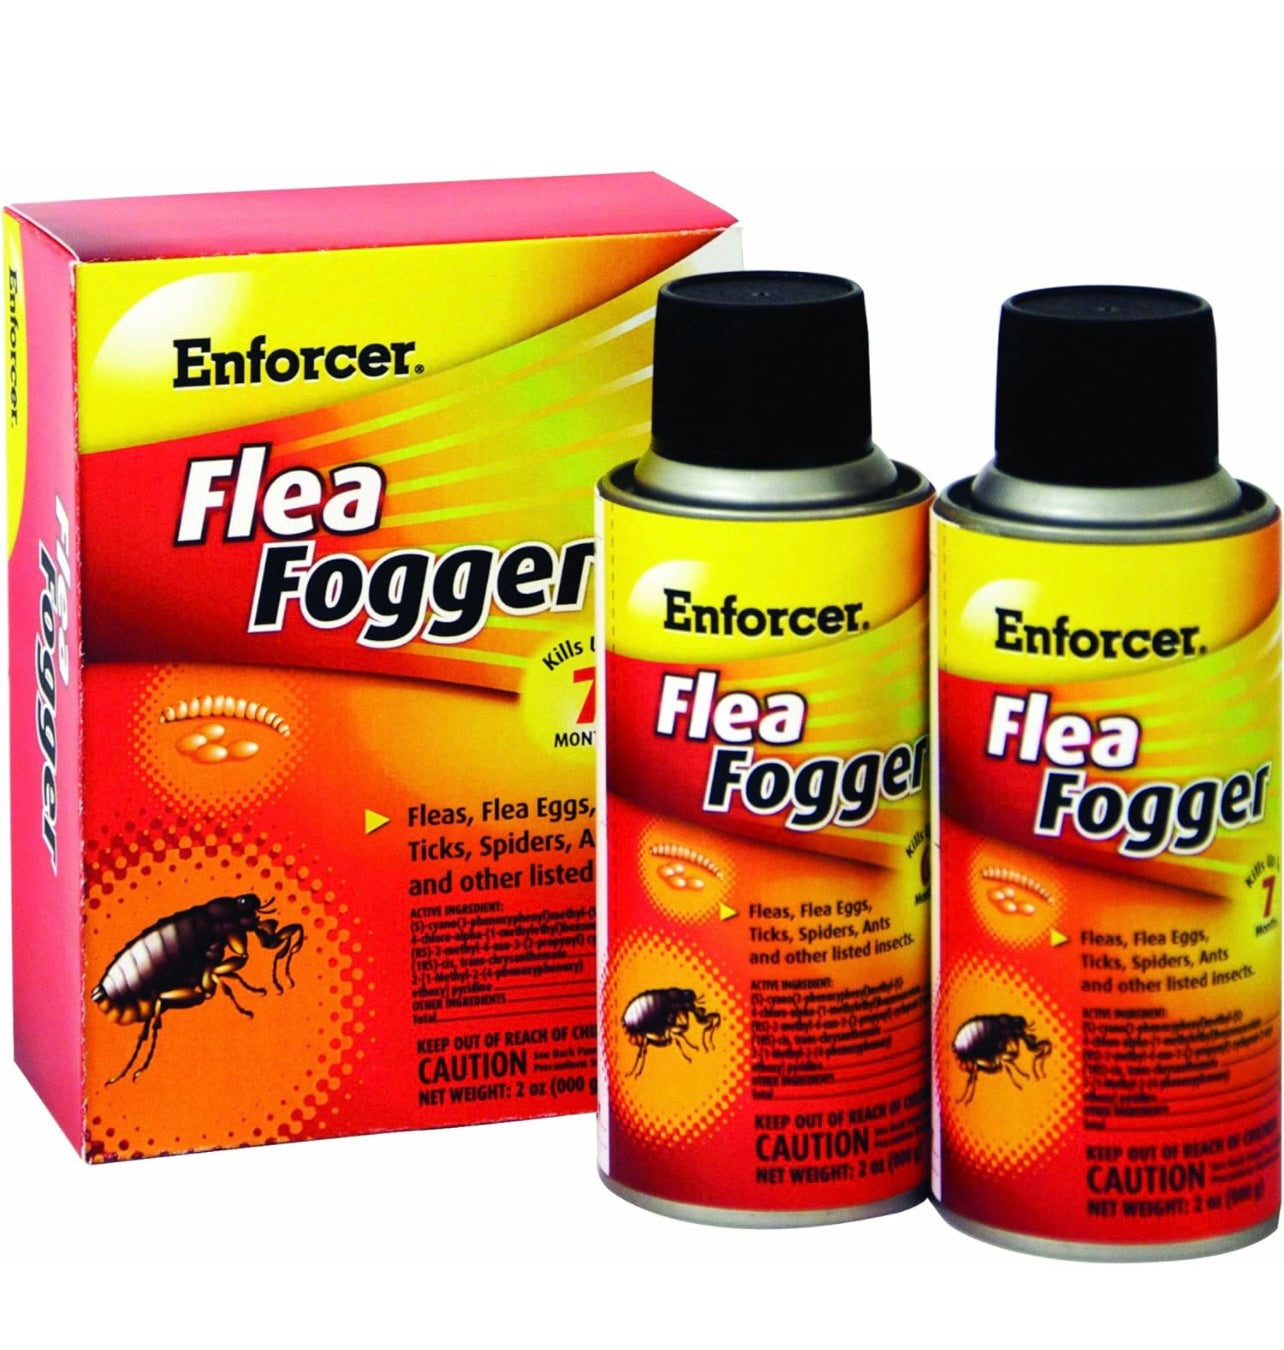 Enforcer 2-Pack Flea Fogger